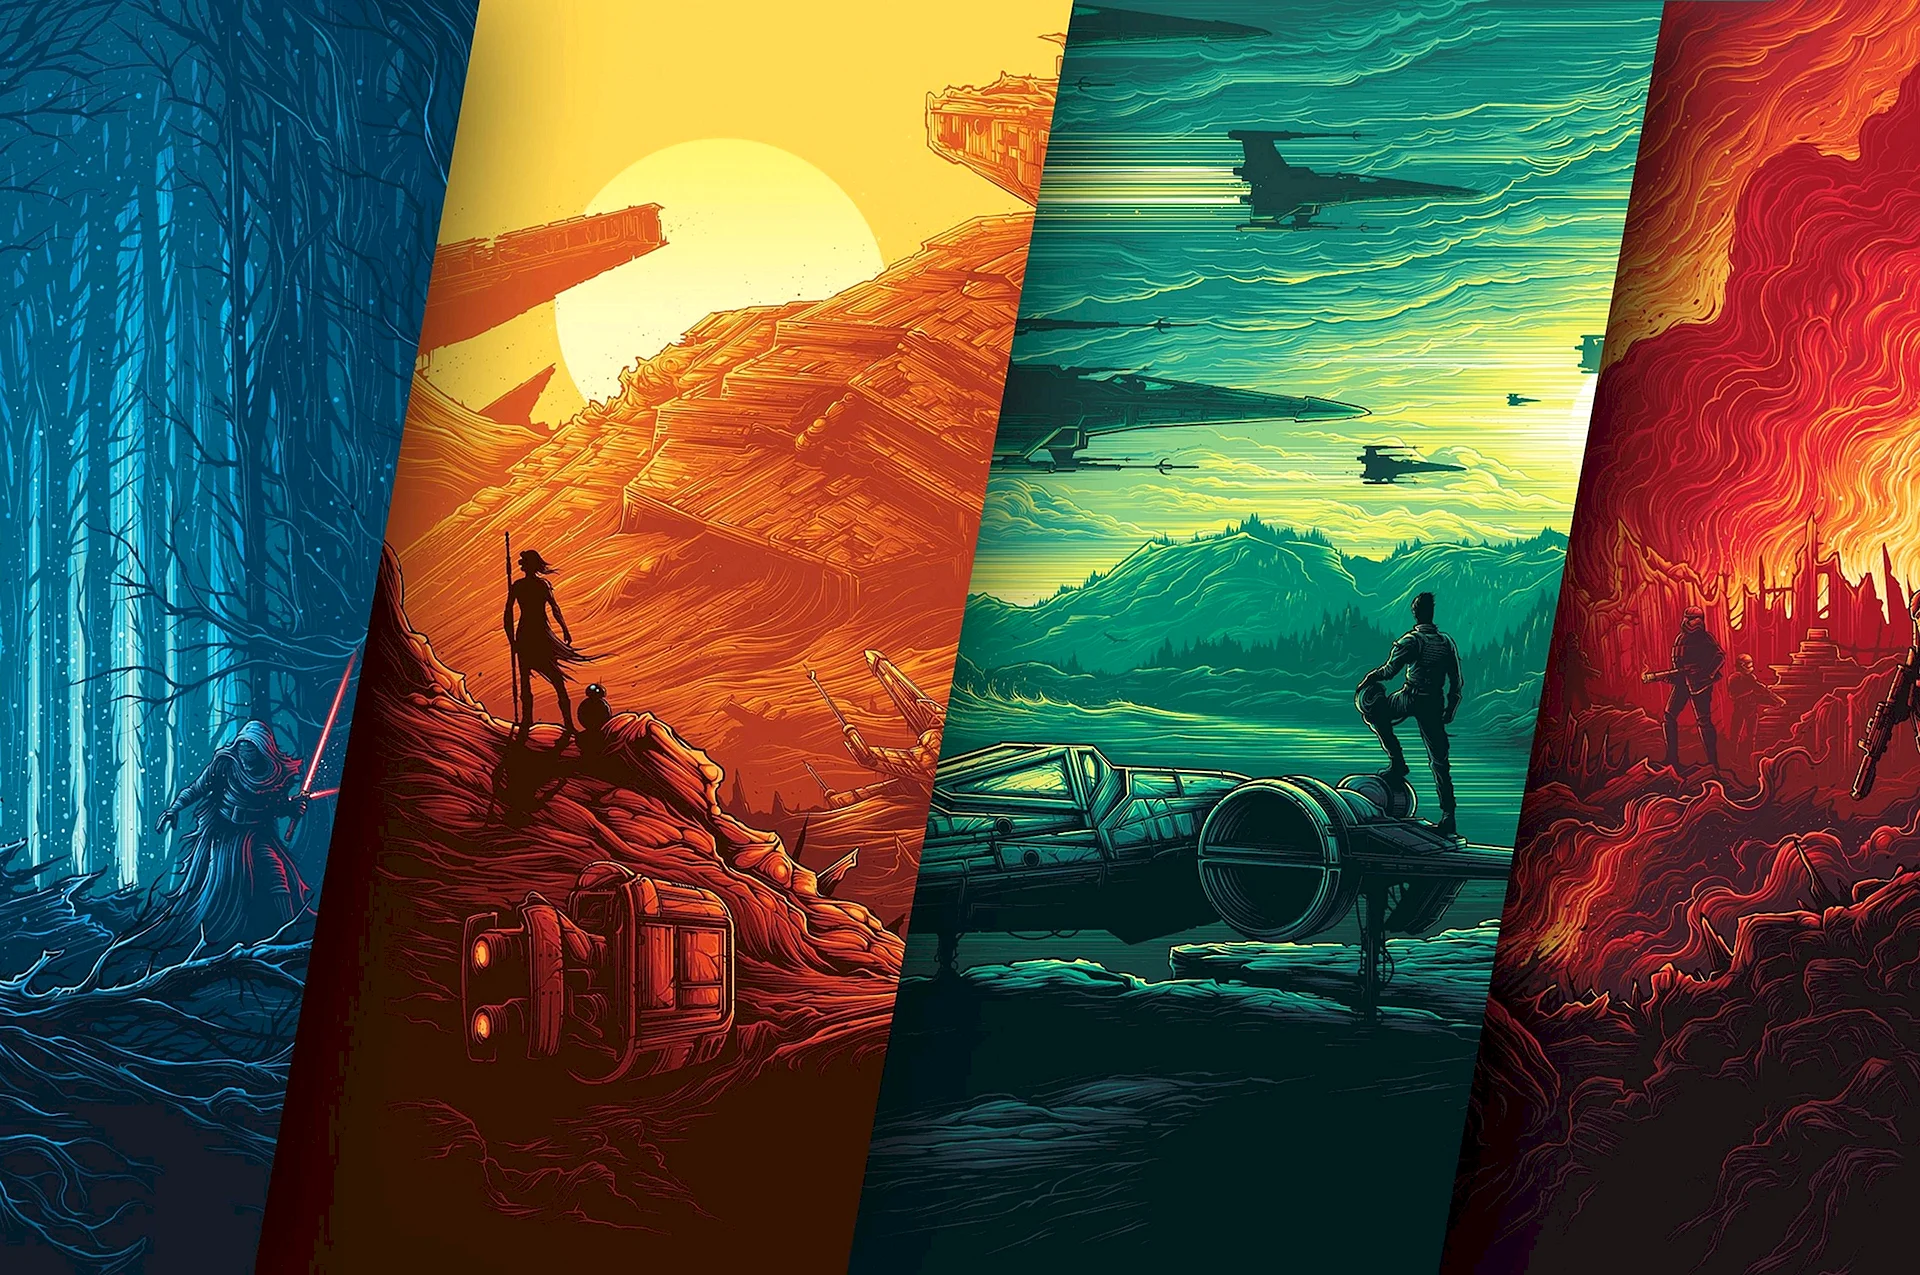 Star Wars Art Wallpaper